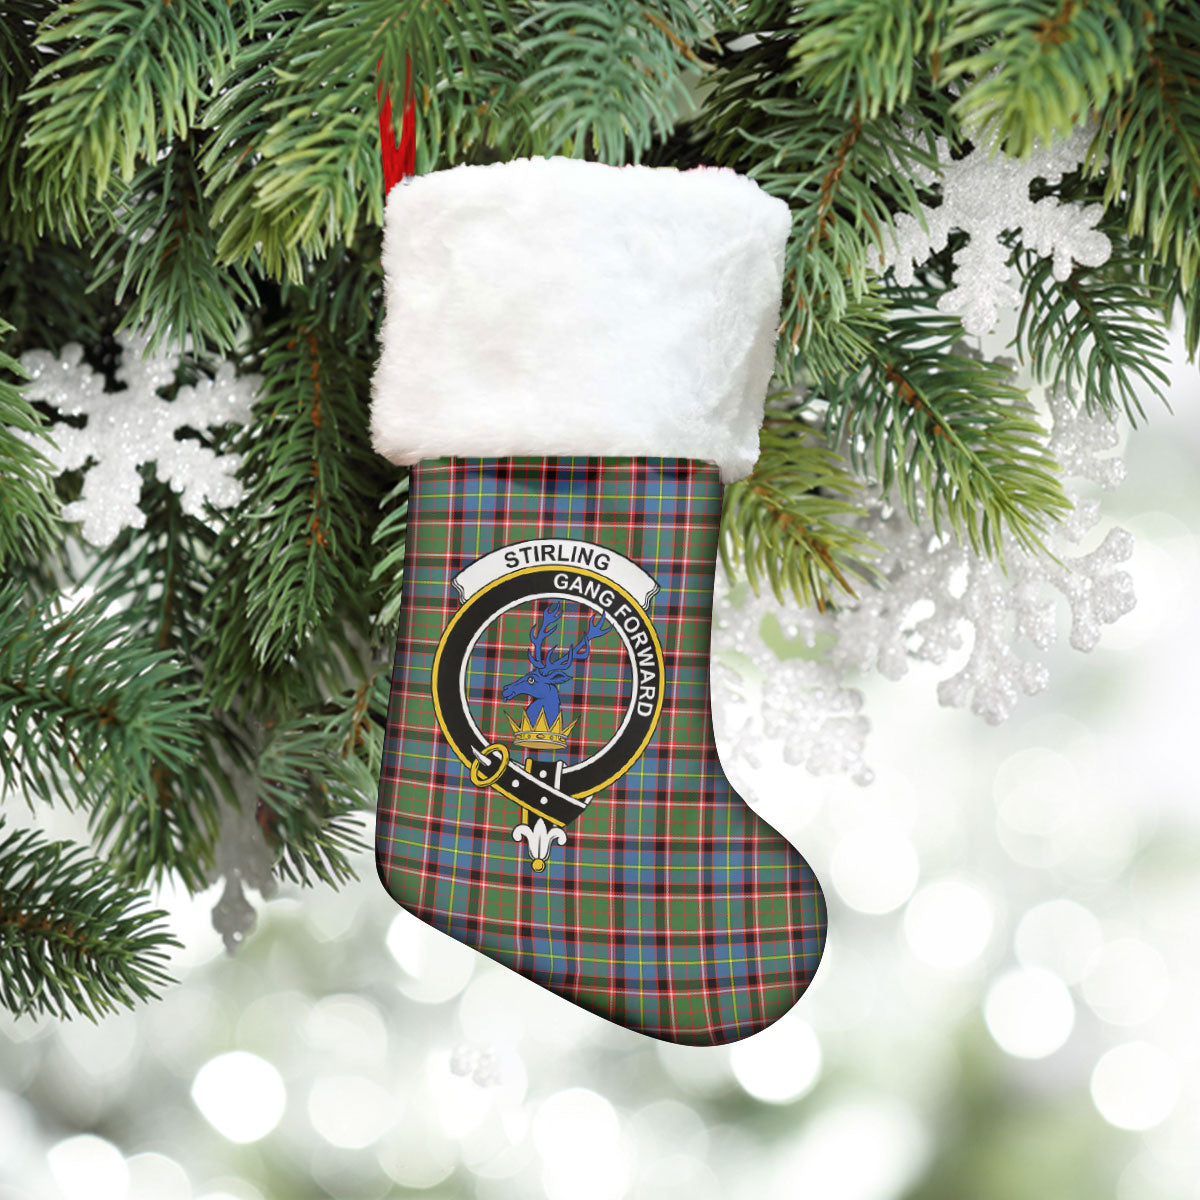 Stirling (of Cadder-Present Chief) Tartan Crest Christmas Stocking